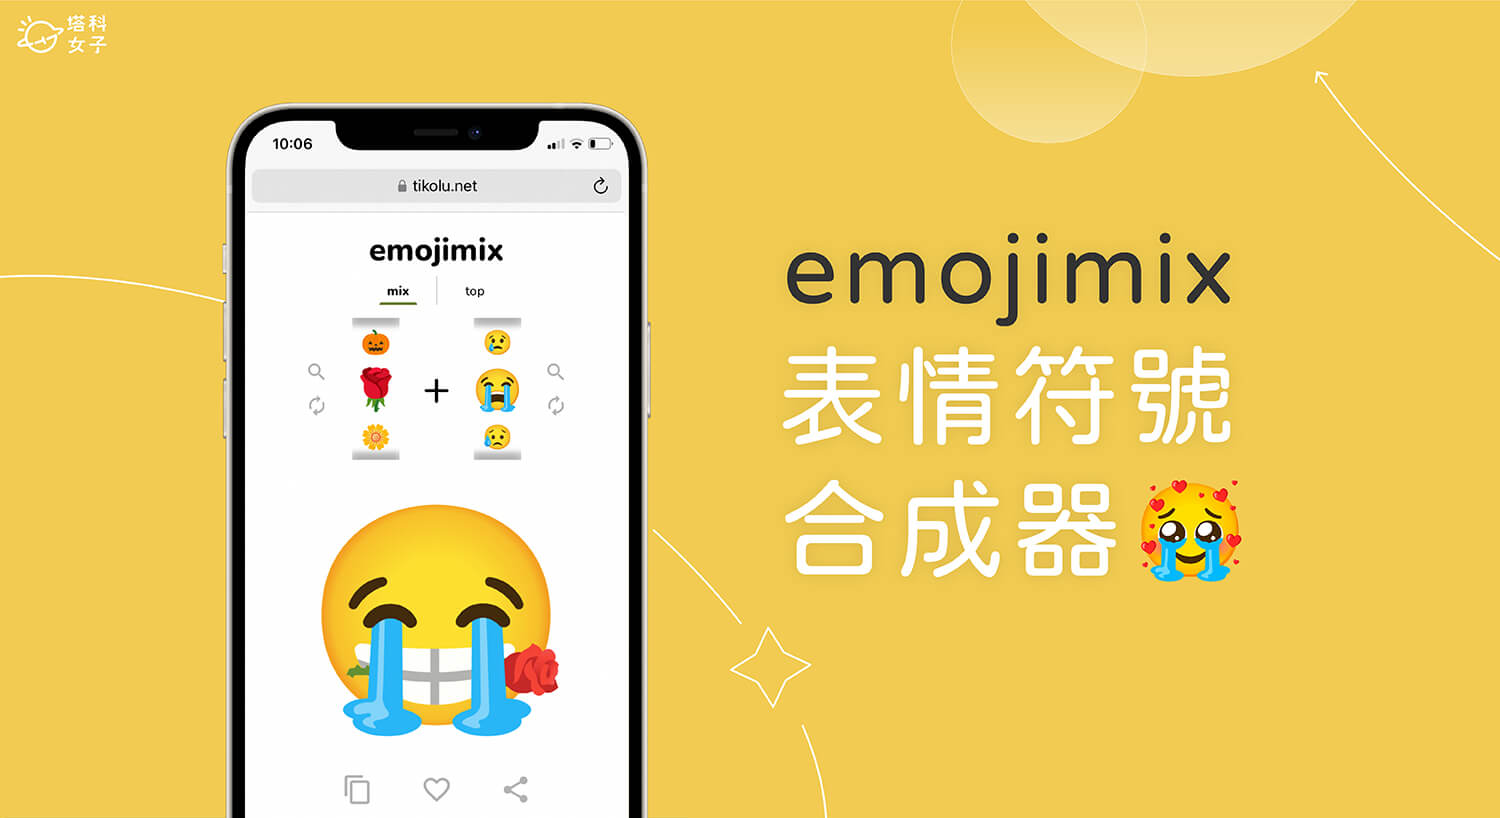 Emoji 合成器《emojimix by Tikolu》將兩個表情符號合併創造新的 Emoji